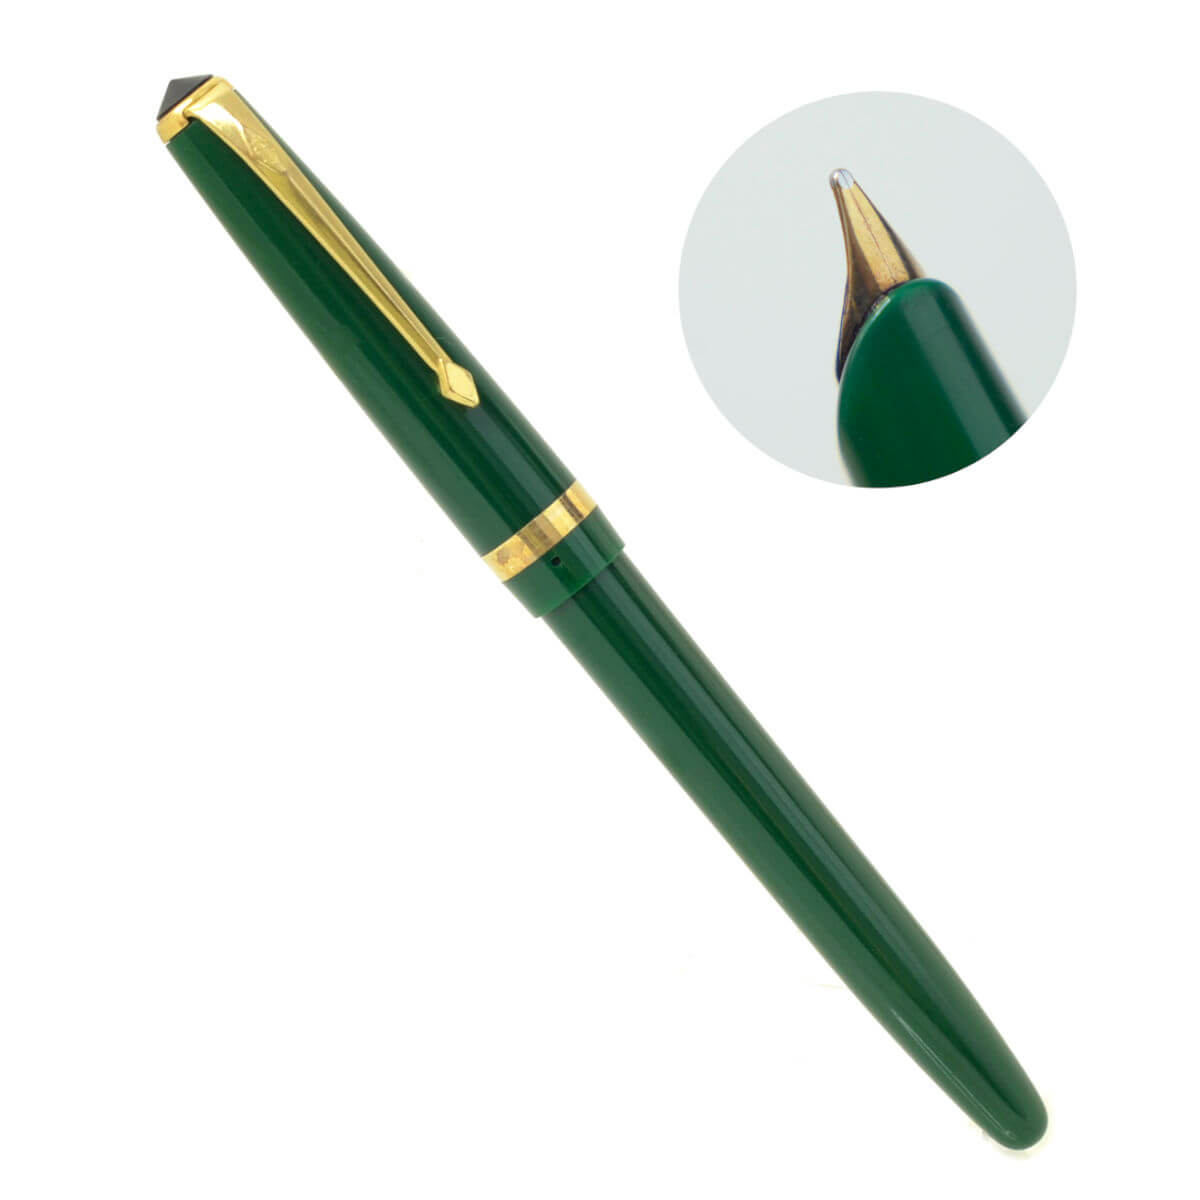 Vintage conway stewart 106 aero filler fountain pen – 14K solid gold M nib – Clean